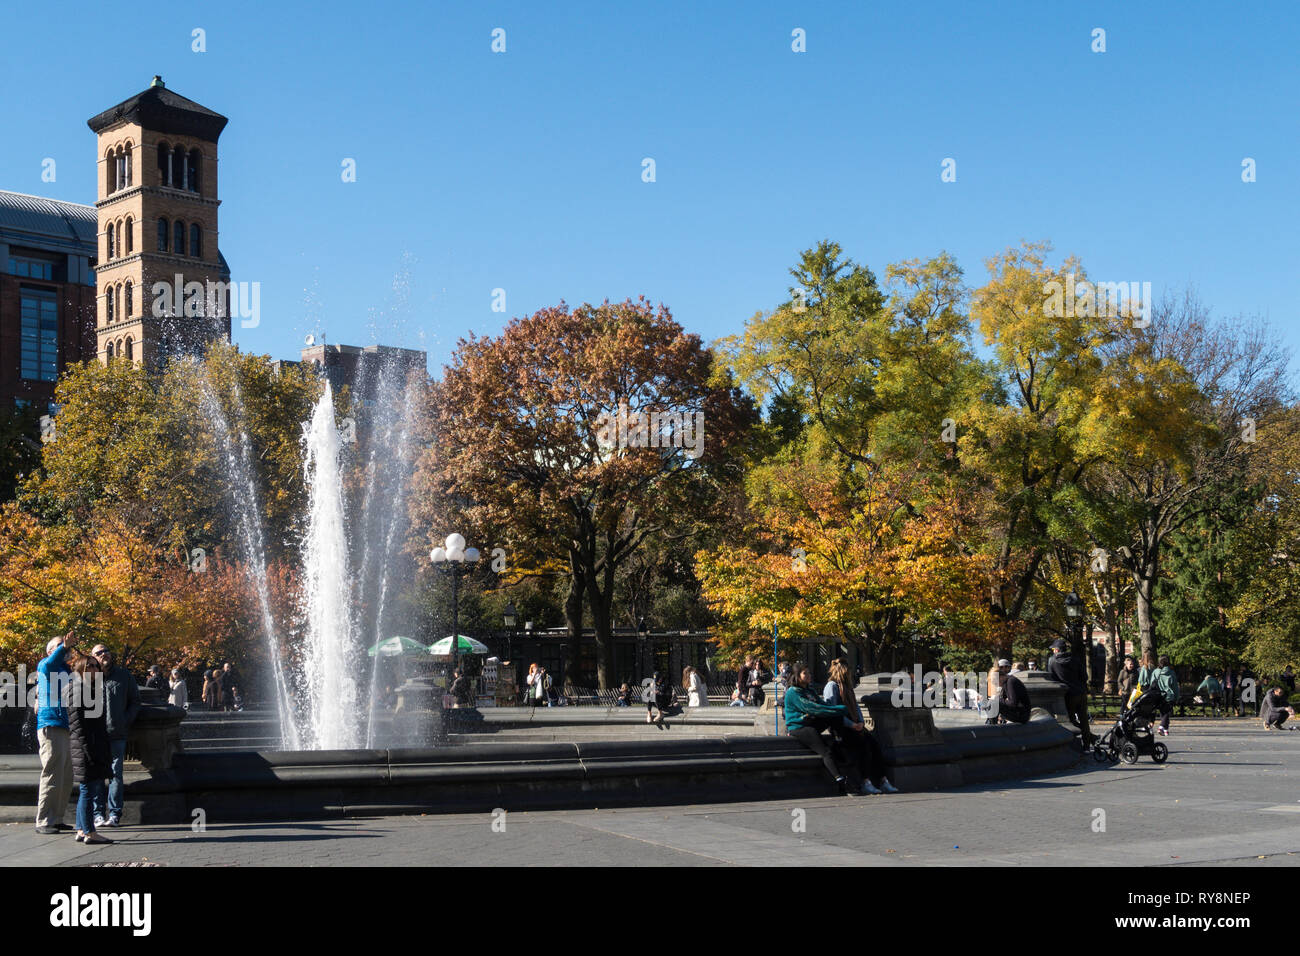 Washington Square Park, Greenwich Village, NEW YORK, USA Banque D'Images